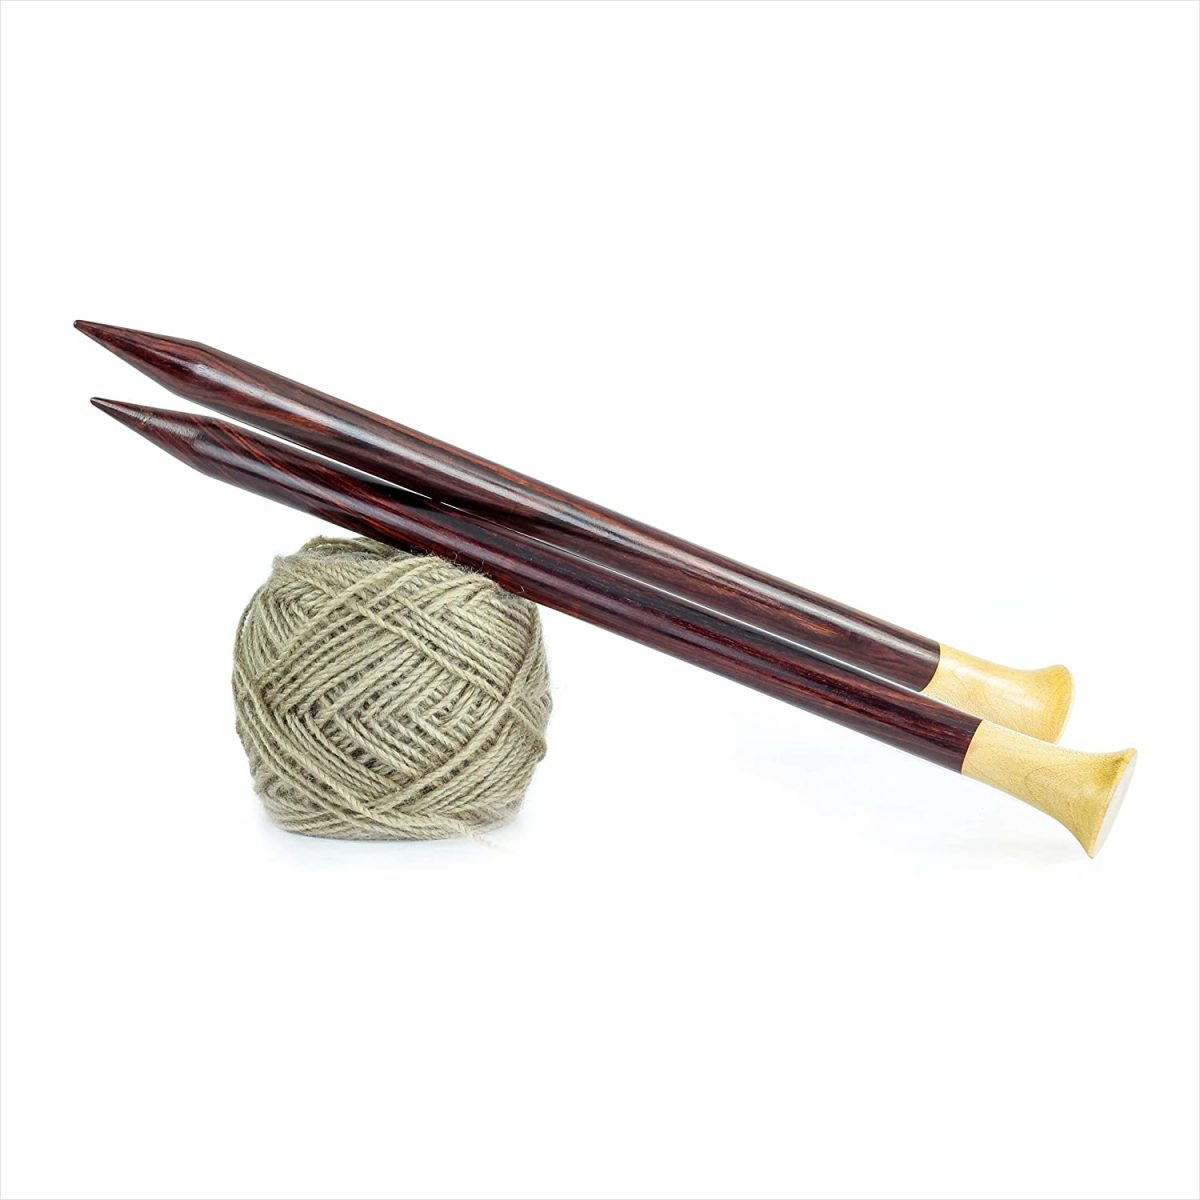 Nagina International 12" Rosewood & Maple Crafted Premium Yarn Knitting Needles | Stitching Accessories & Supplies (Maple Head)